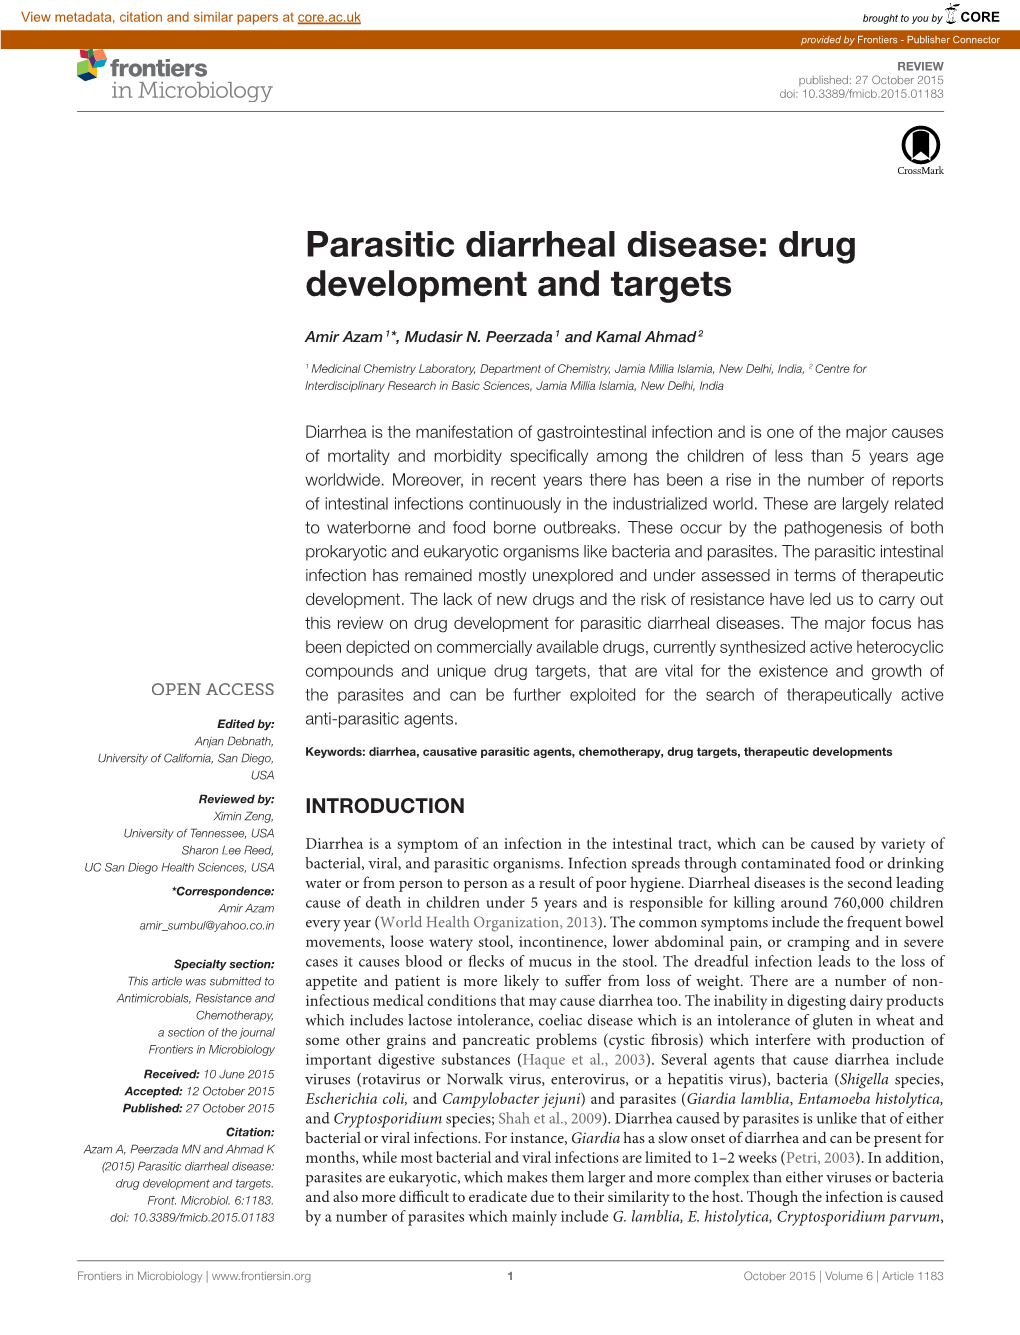 Parasitic Diarrheal Disease: Drug Development and Targets